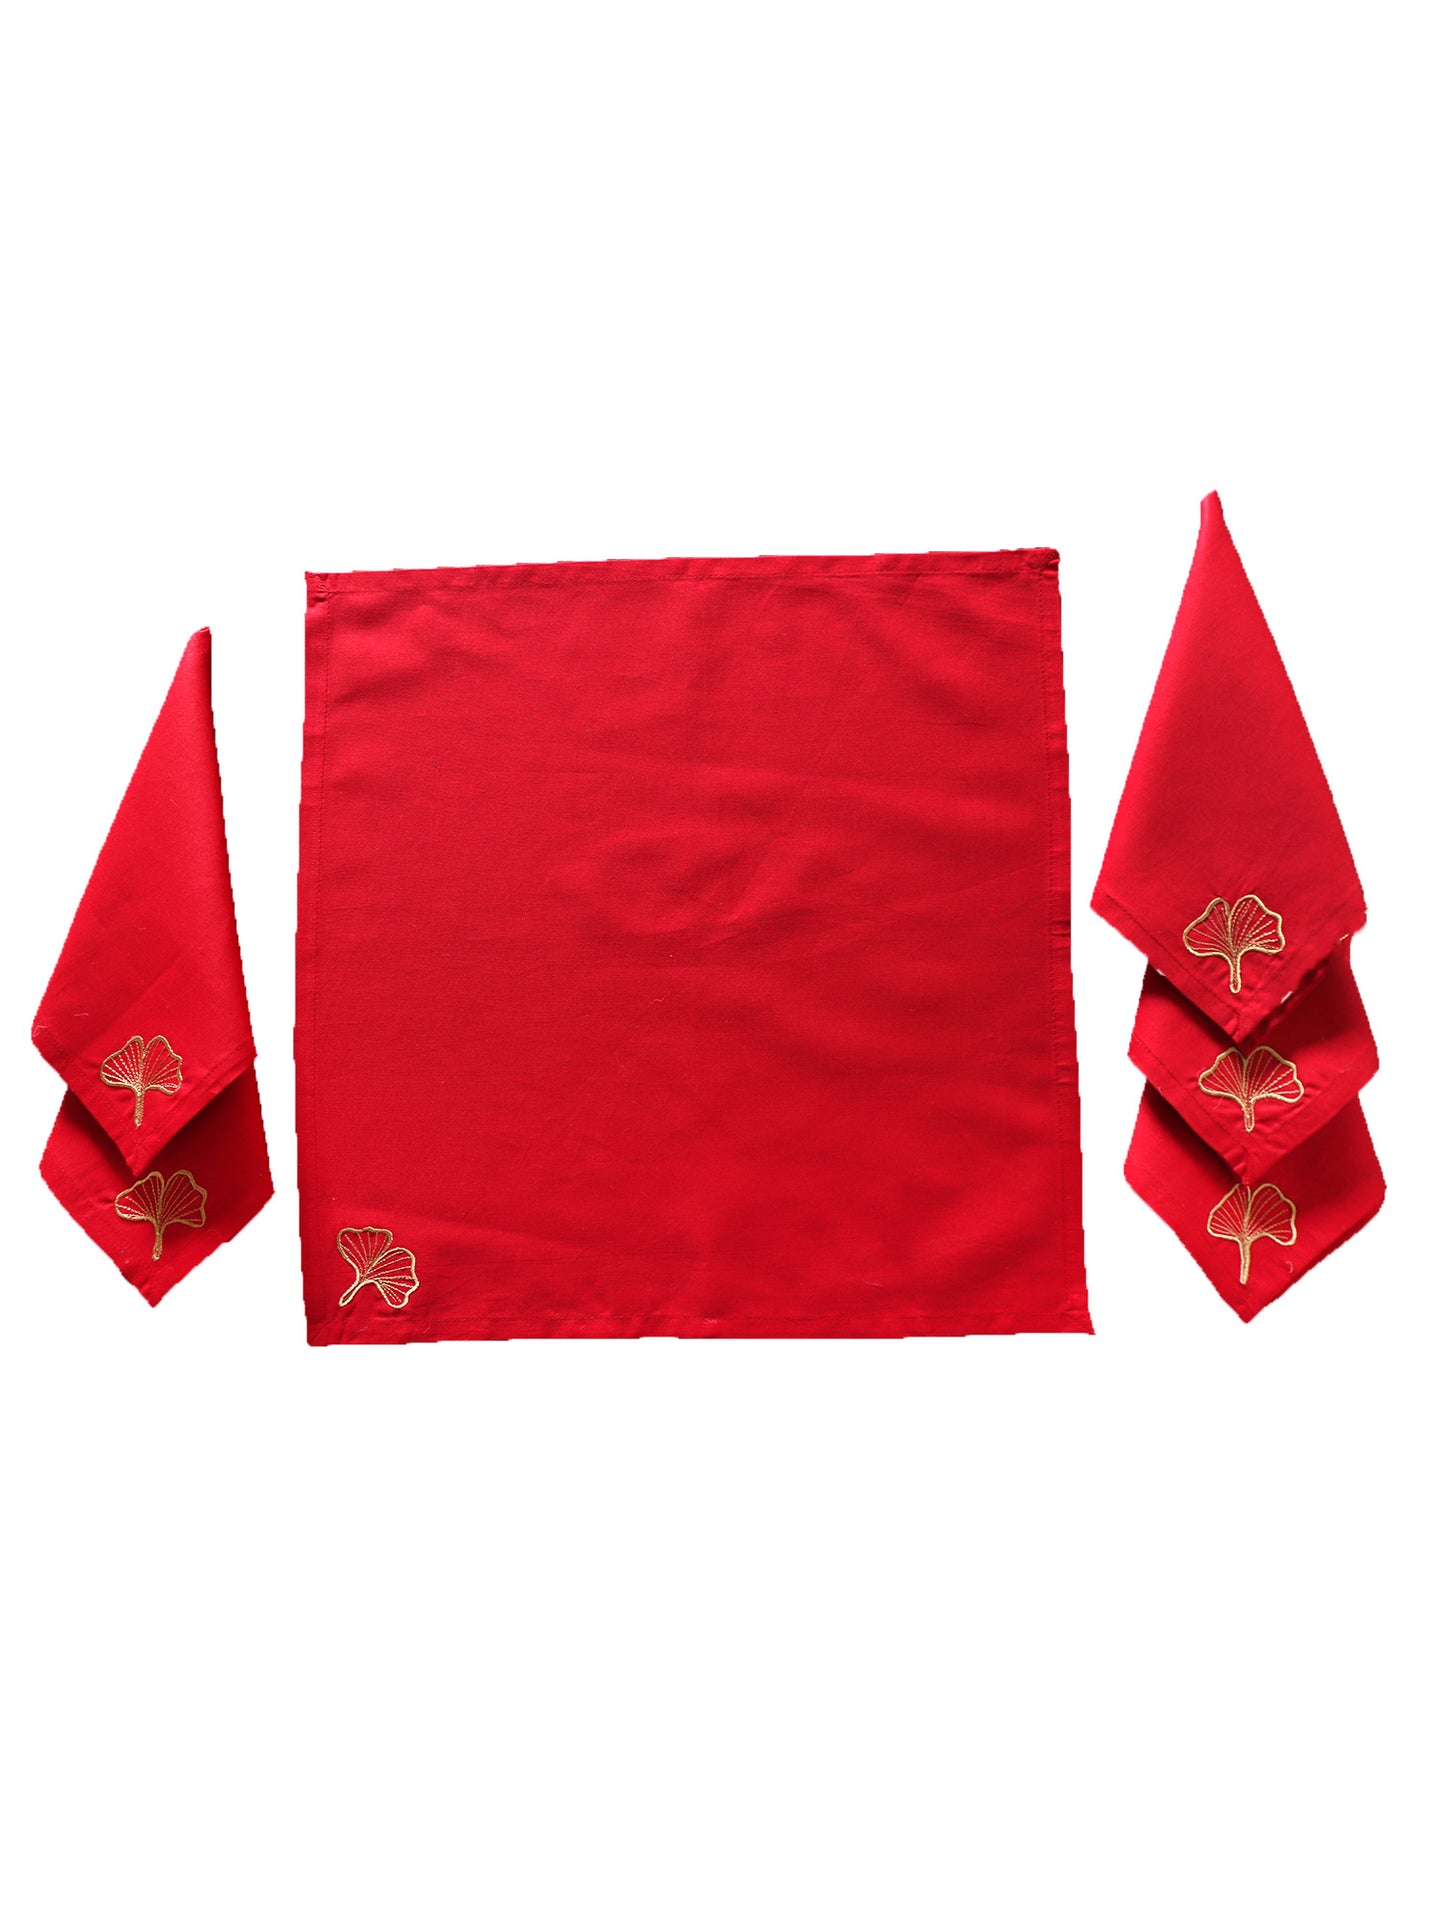 leaf embroidered set of 6 dinner napkins cotton red color - 16x16 inch